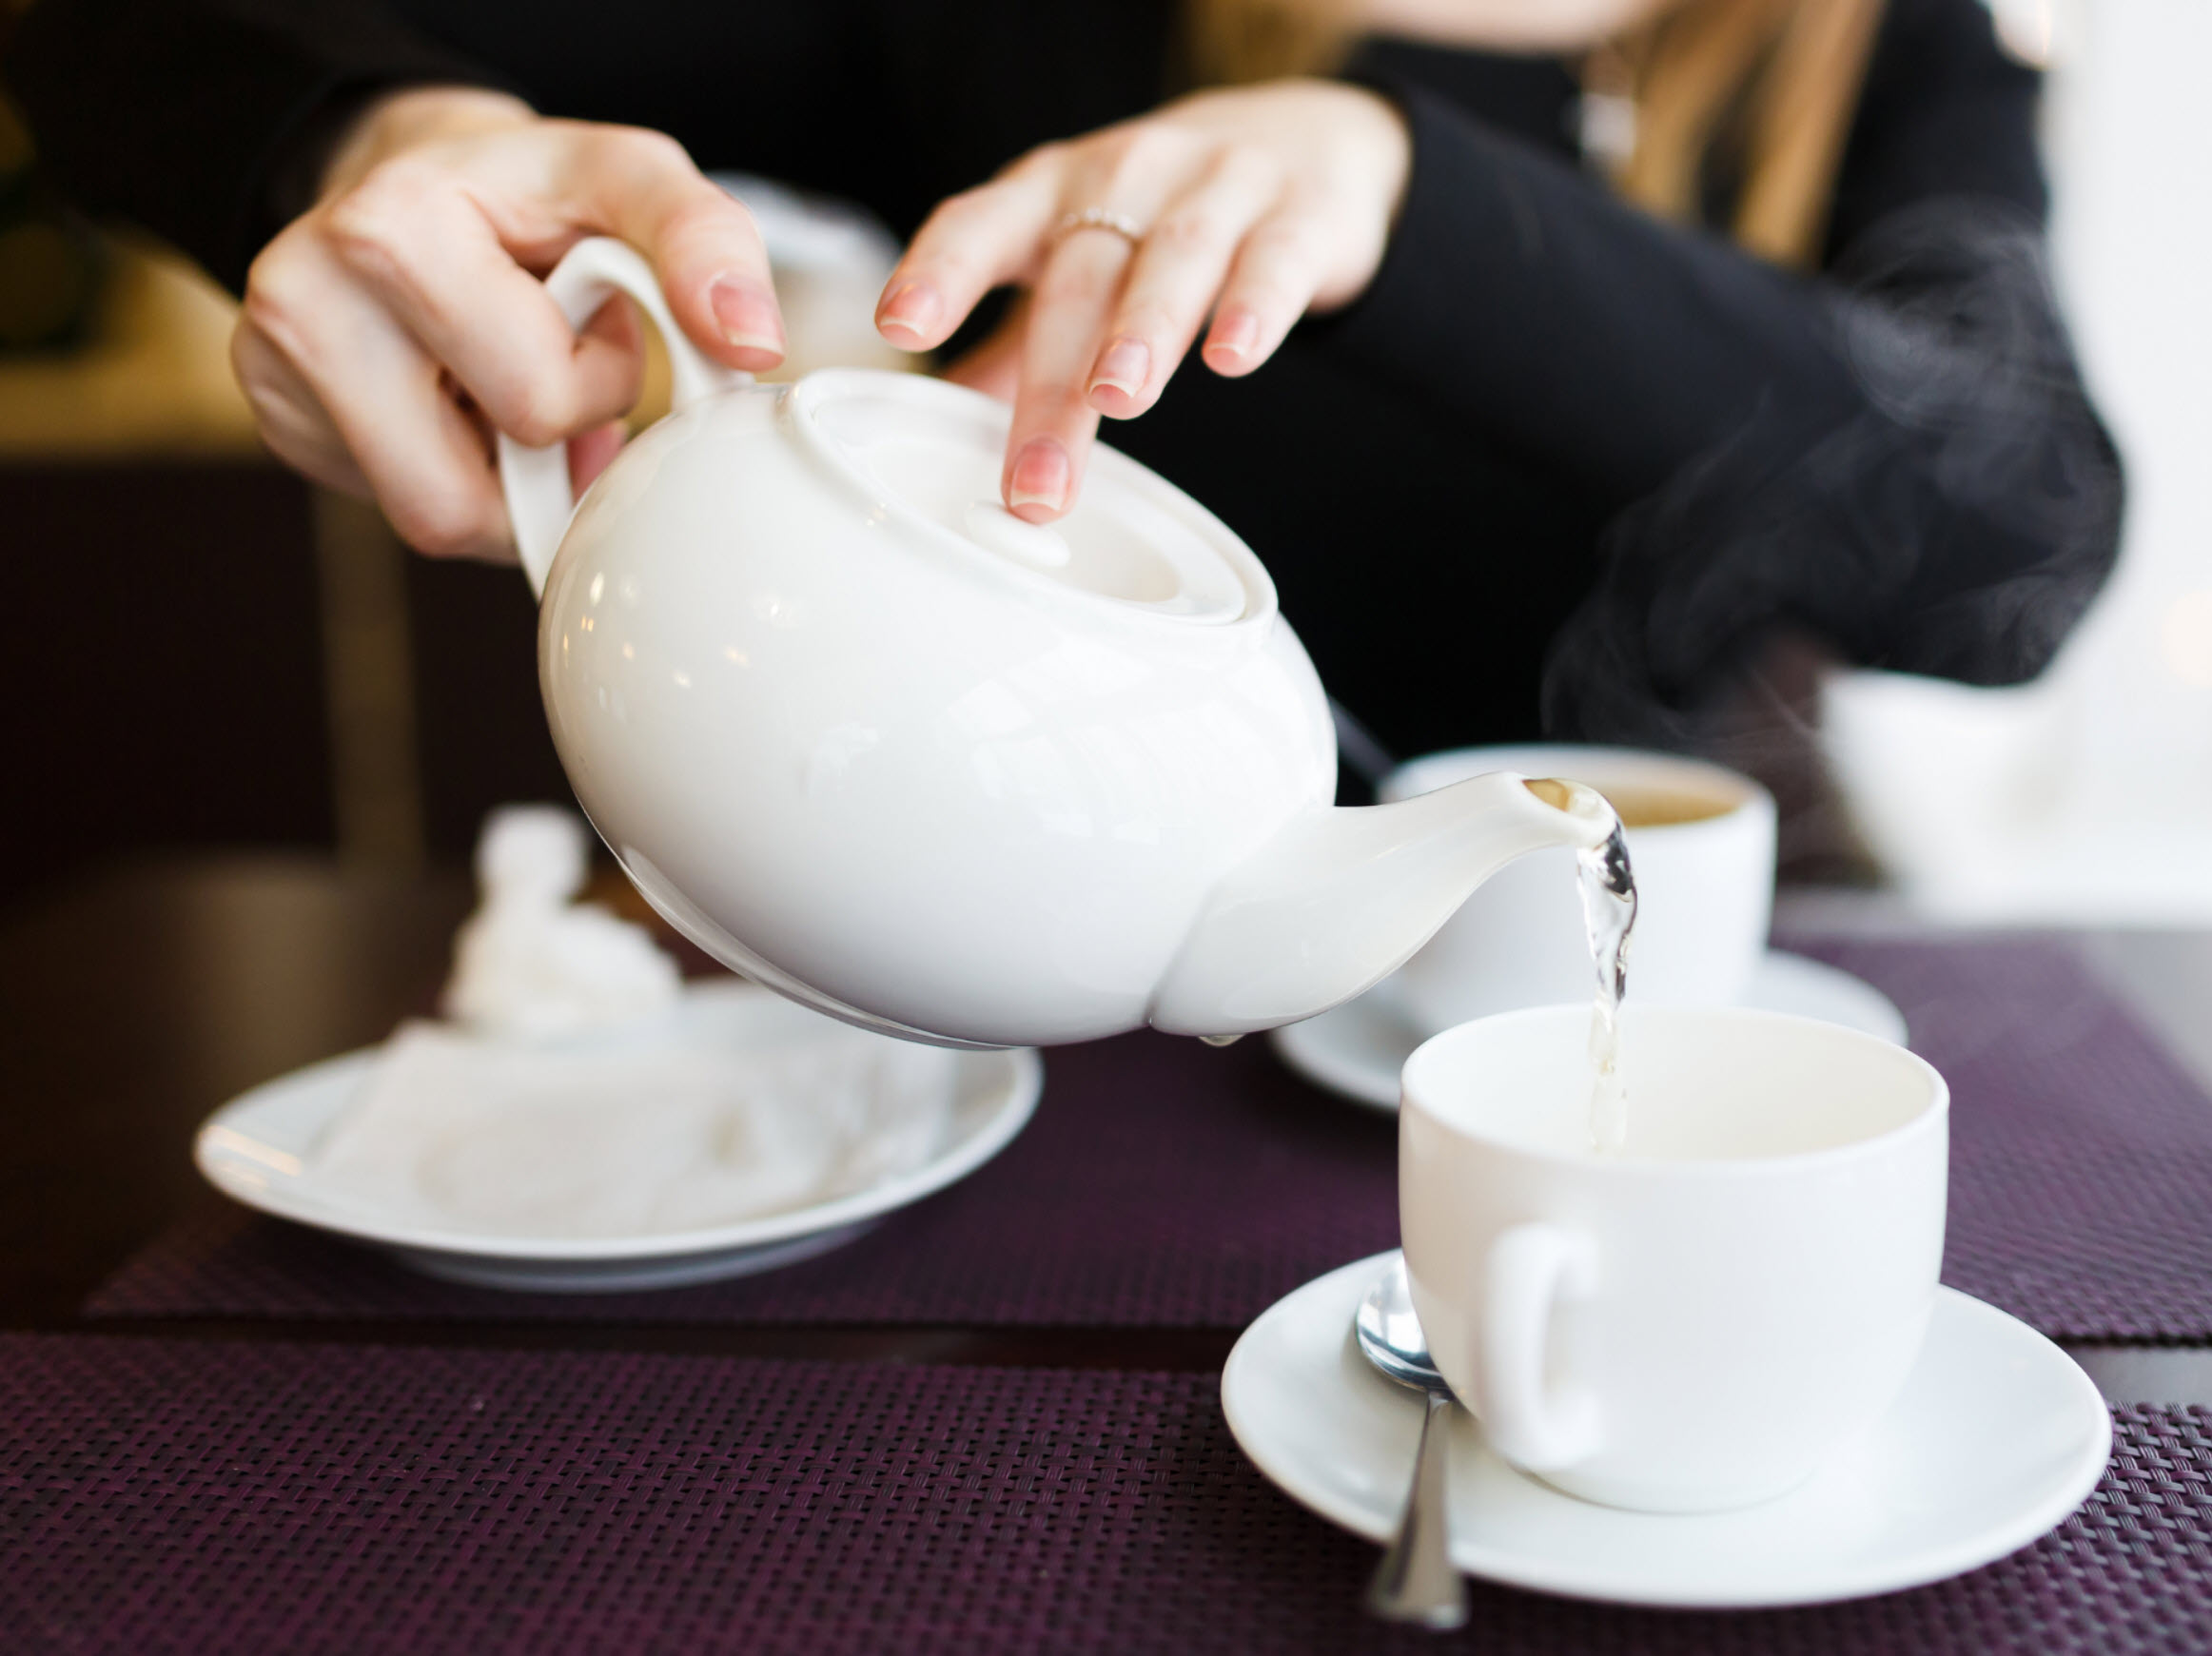 Tea Travel Mug - Simply Better Tea - The Pleasures of Tea